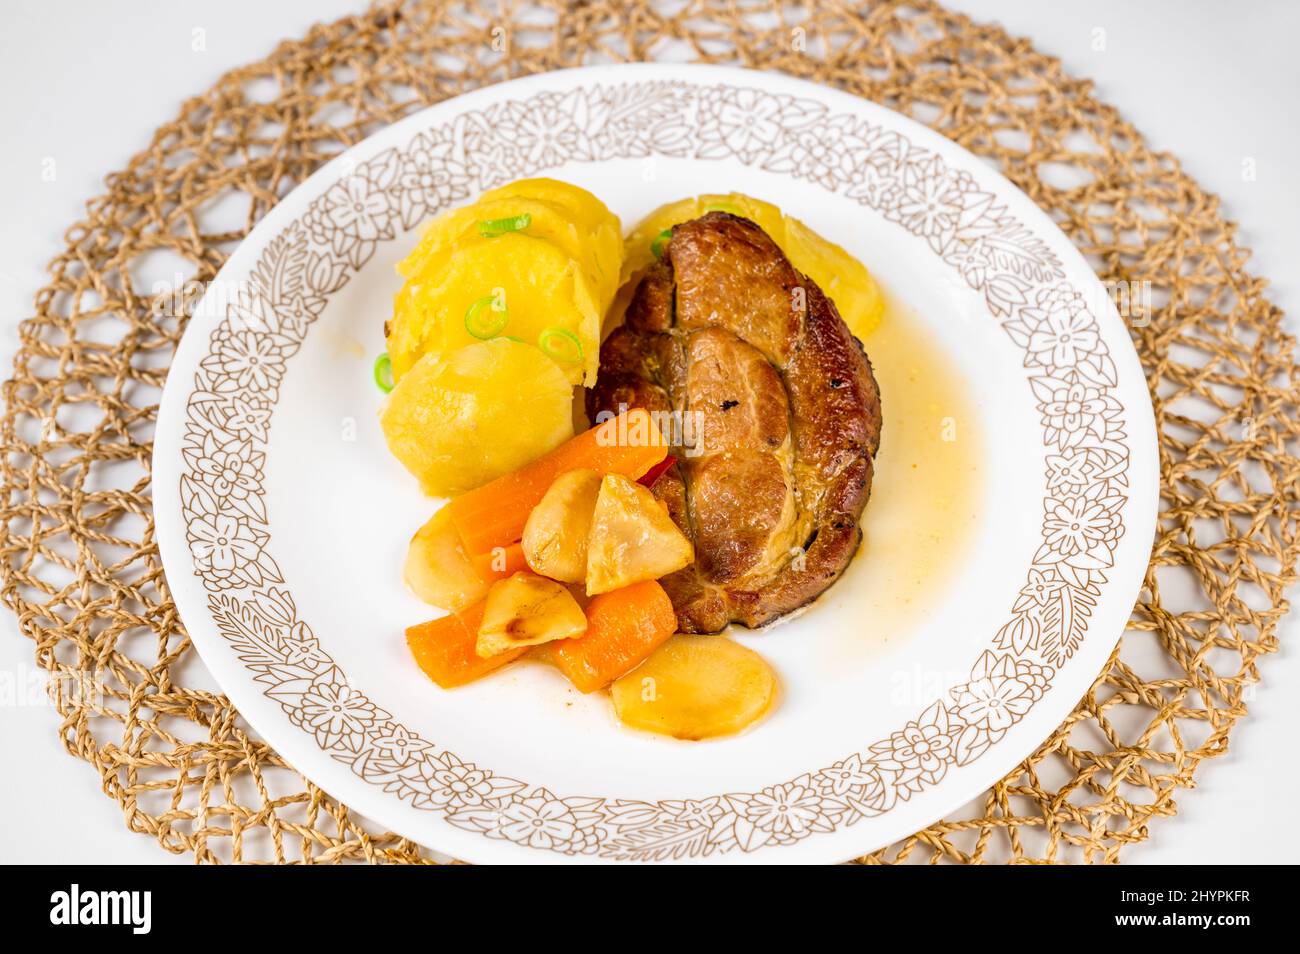 Portion of roasted pork neck steak, boiled potato, baked vegetable on white plate on bamboo pad on white background, closeup. Stock Photo